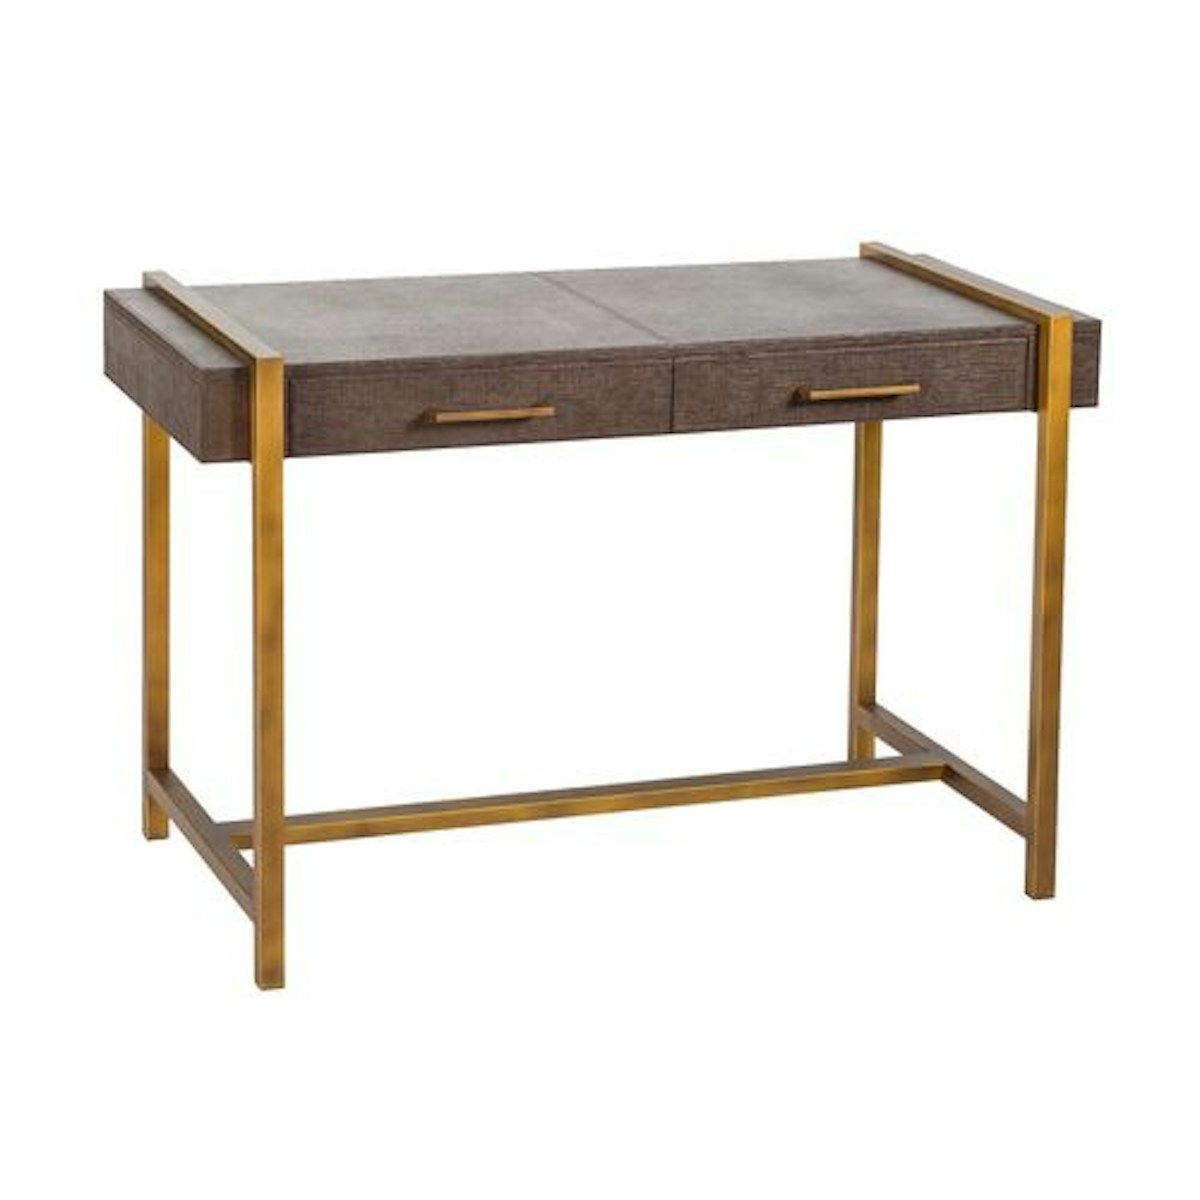 Brass table | Shop console tables online at LuxDeco.com